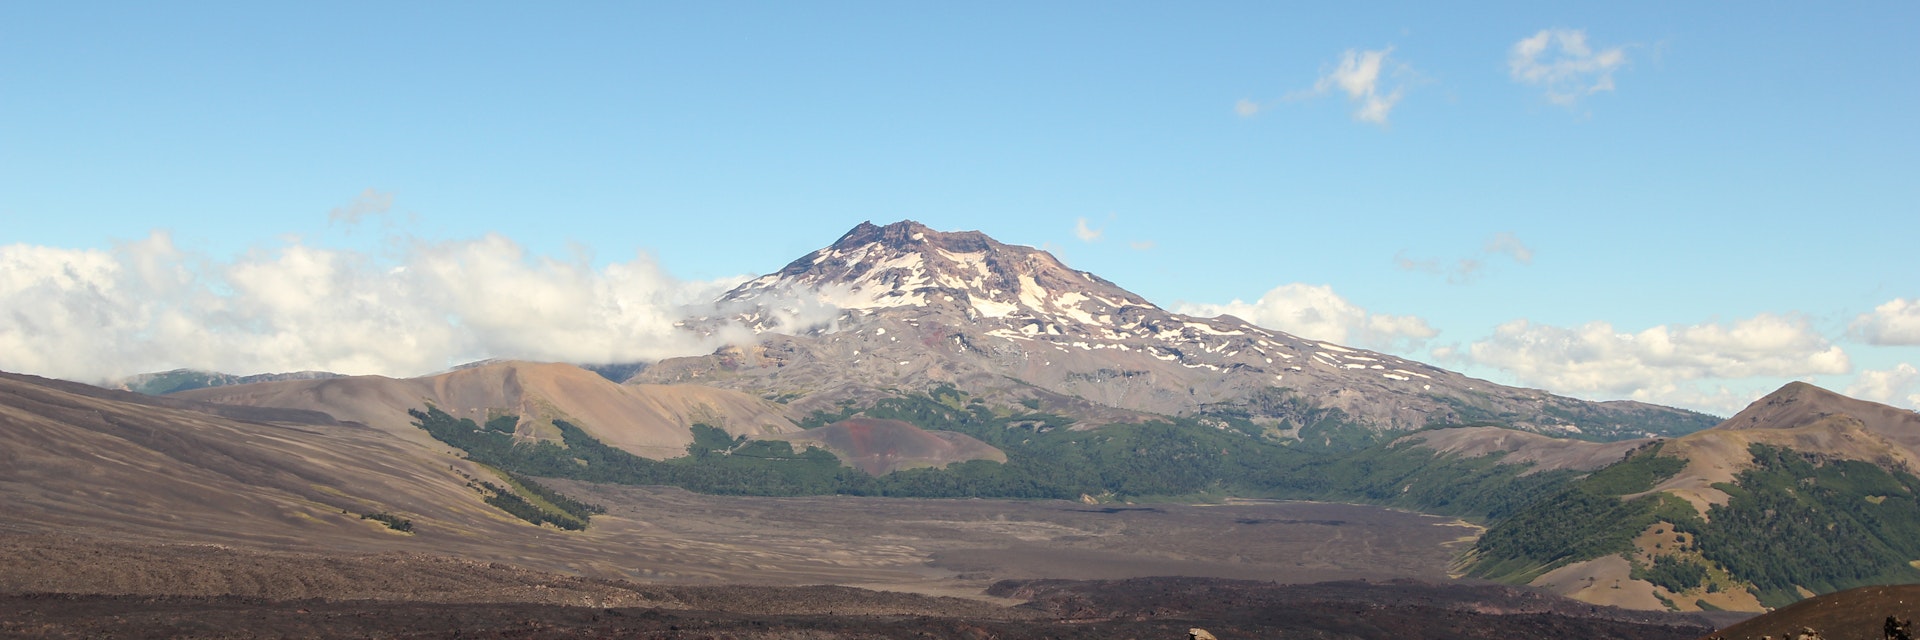 Tolhuaca volcano in Malalcahuello and Nalcas National Park, Chile.